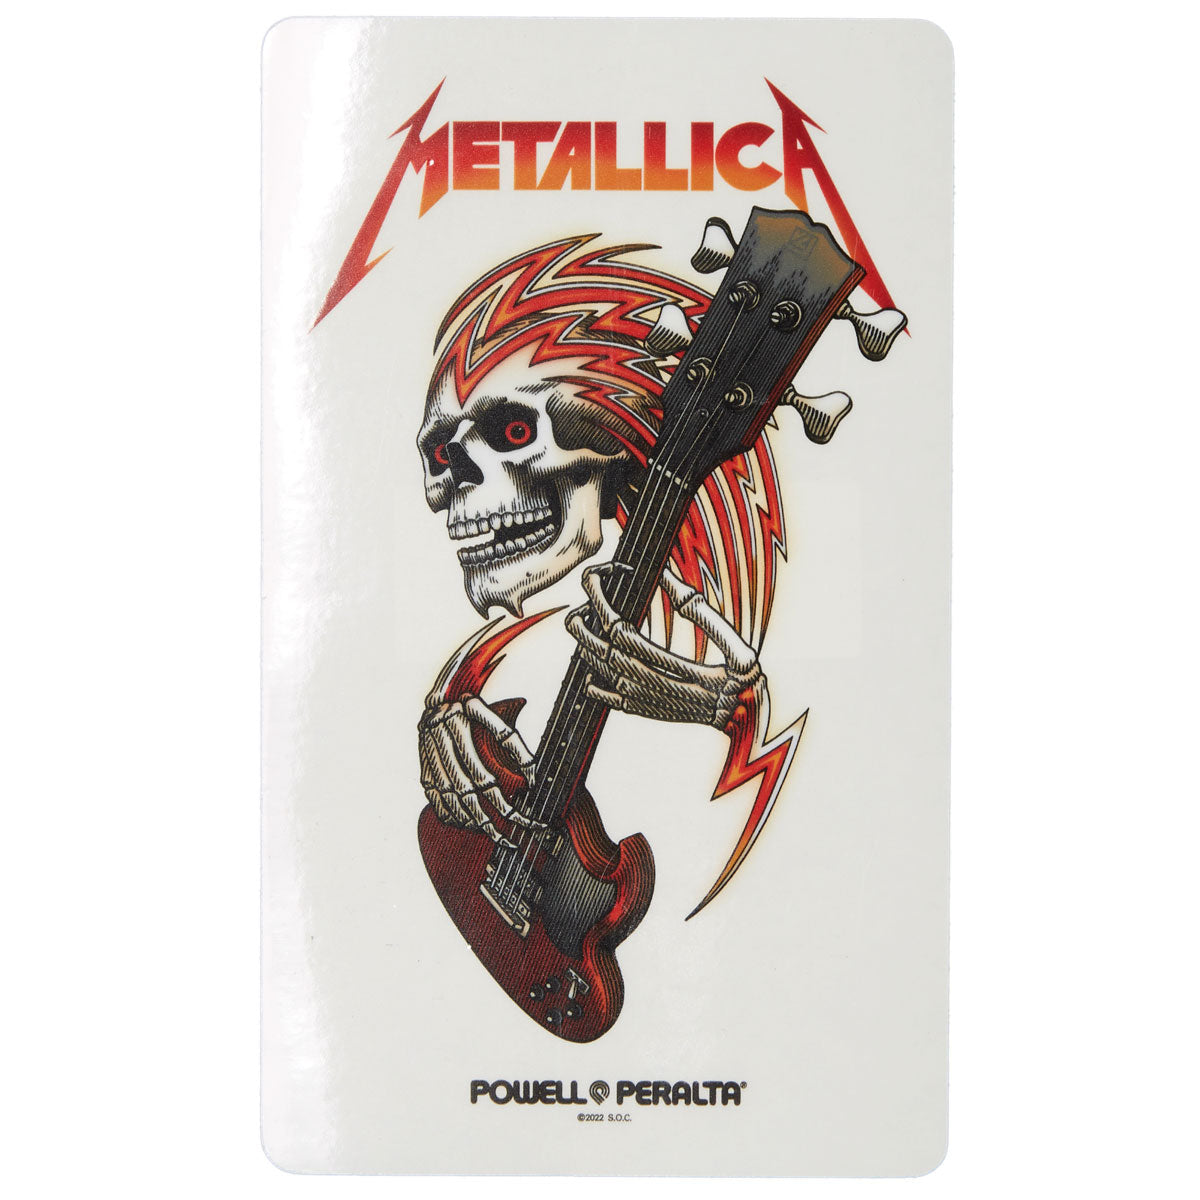 Powell Peralta x Metallica Collab Sticker image 1